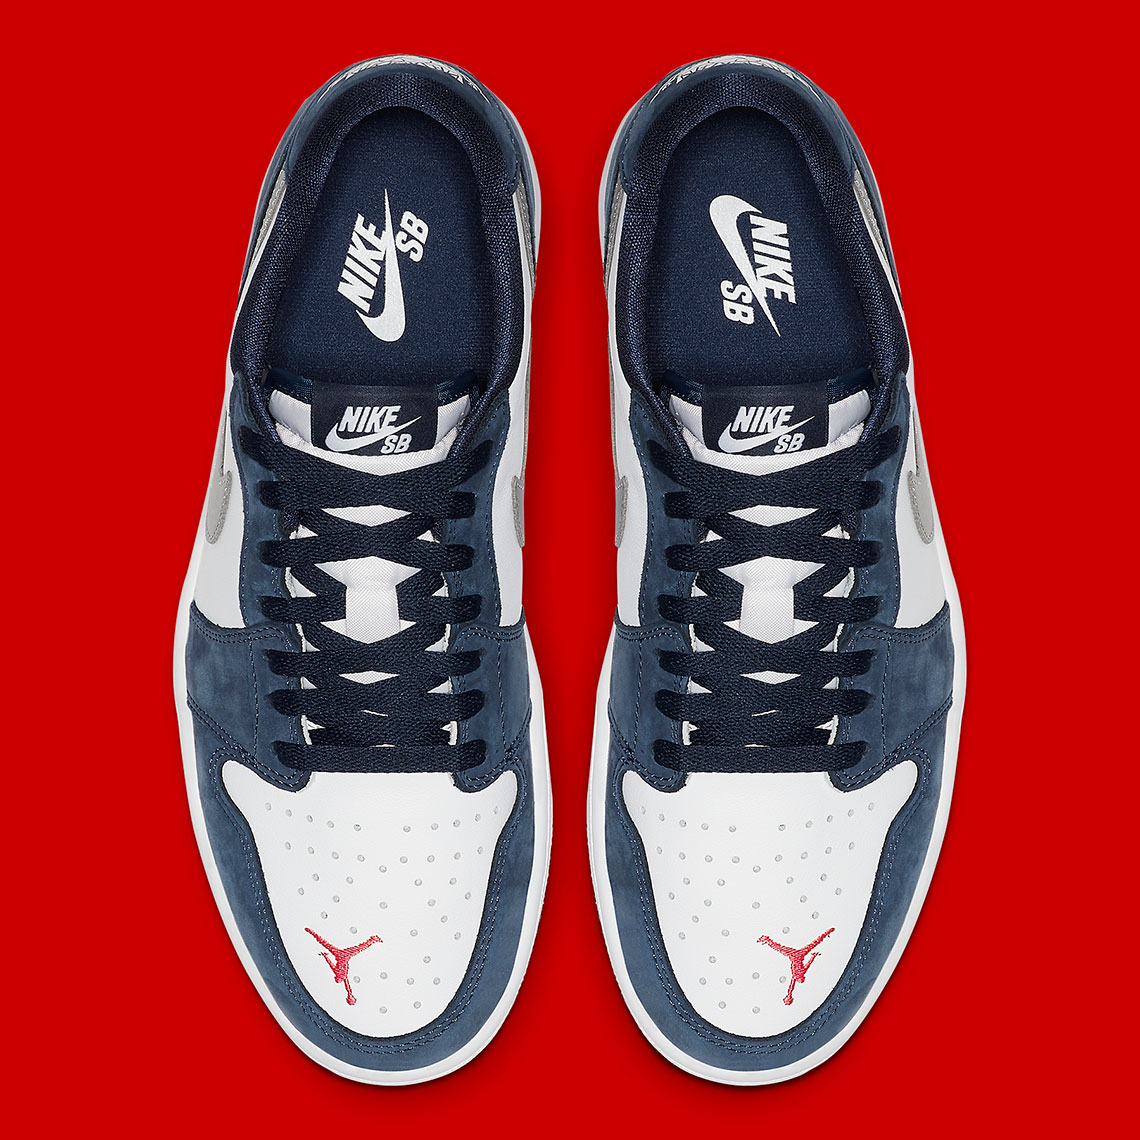 Nike SB X Air Jordan 1 Low Dropping Soon: Official s